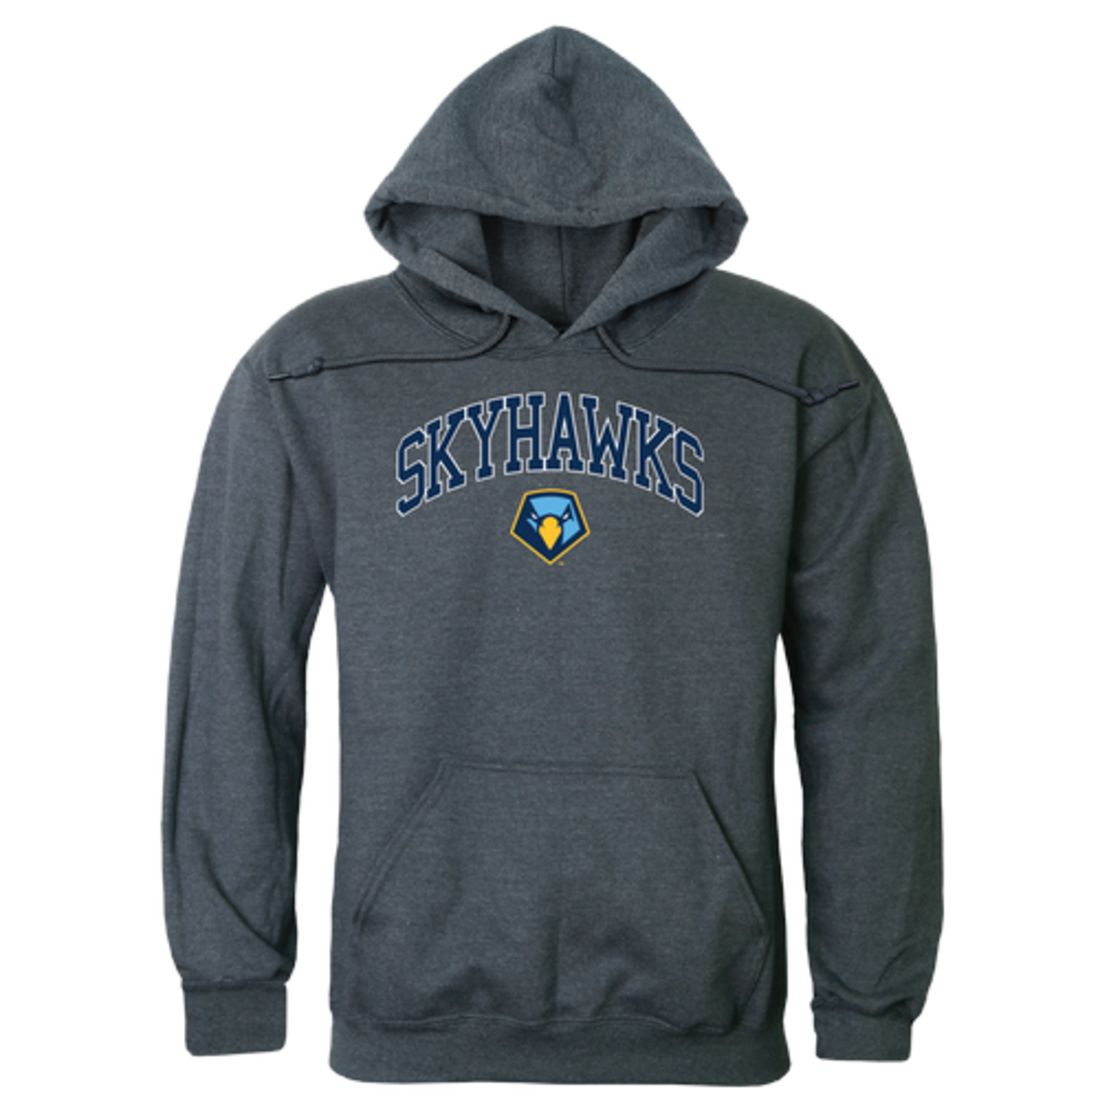 Point-University-Skyhawks-Campus-Fleece-Hoodie-Sweatshirts